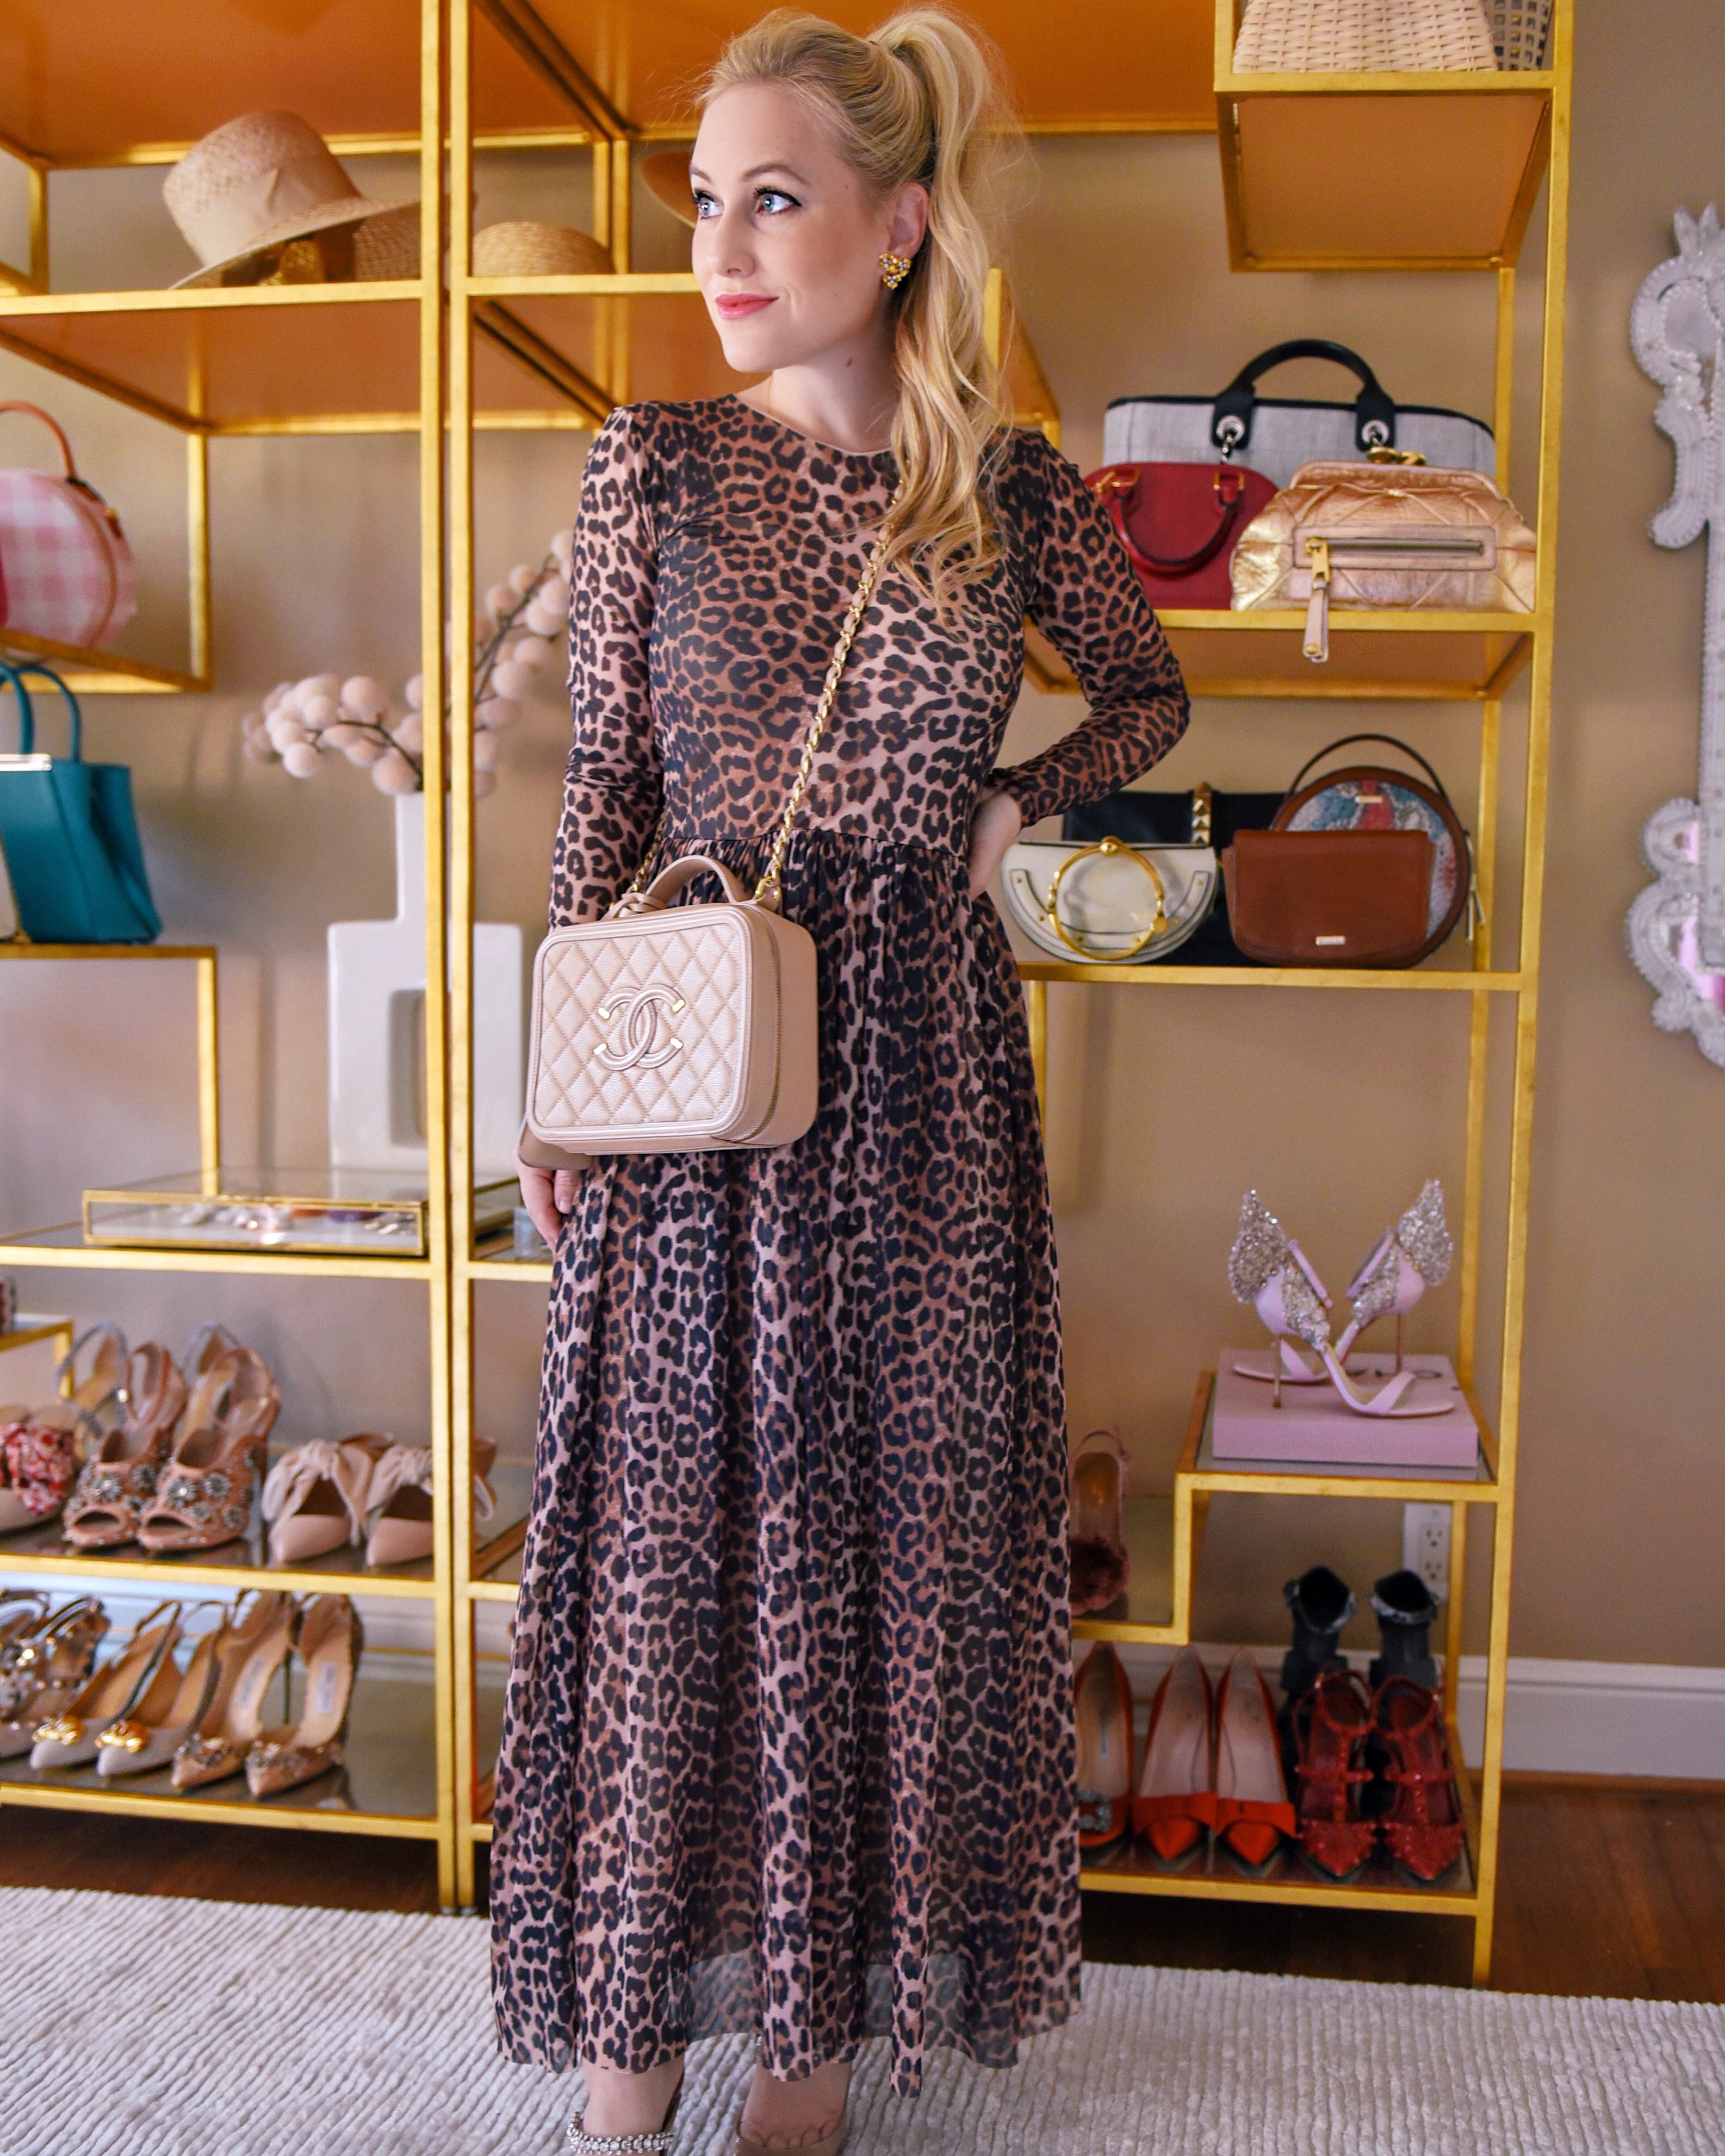 Lo-Murphy-eBay-Handbags-designer-handbag-saint-laurent-bag-pink-handbags-dallas-blogger-ganni-leopard-dress-chanel-bag